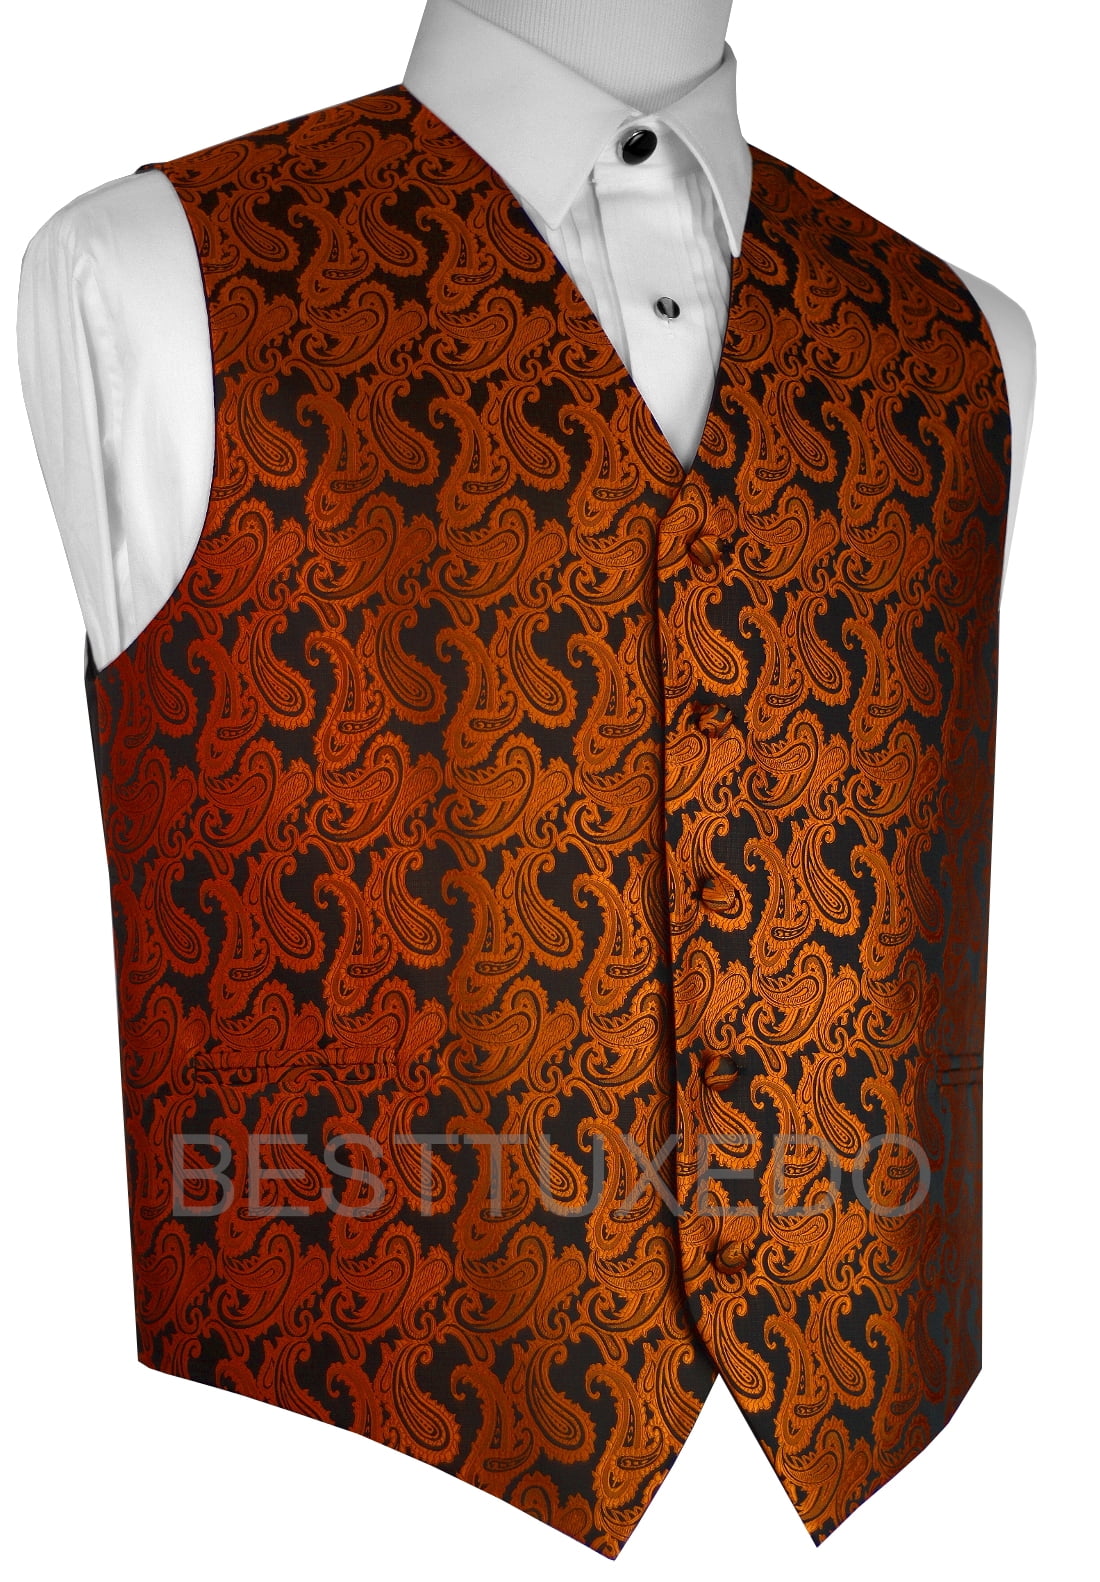 New Men's Formal Vest Tuxedo Waistcoat orange_Bowtie wedding prom party